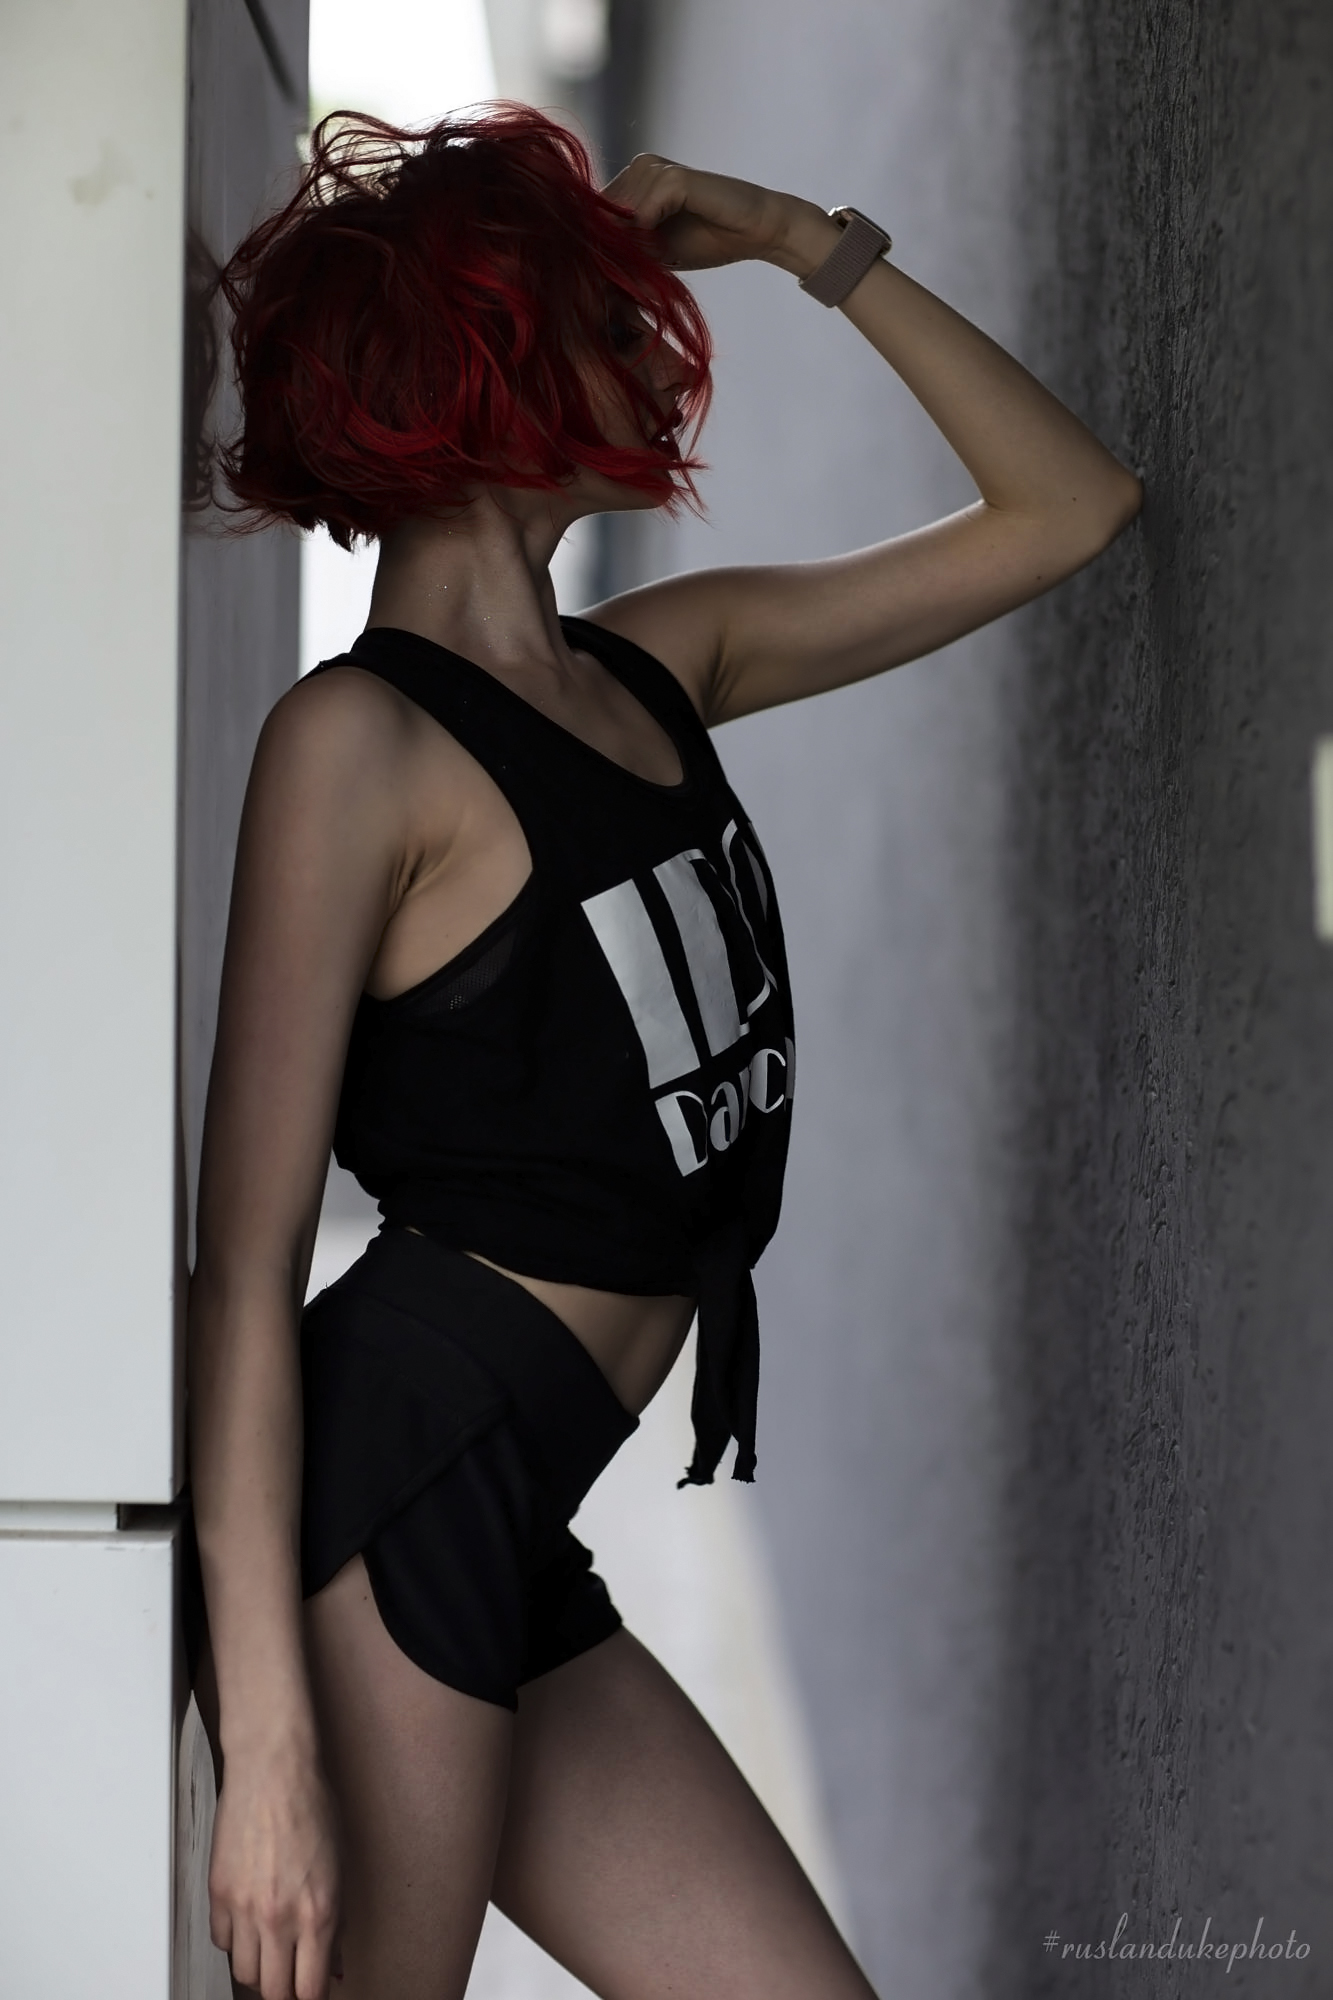 Ruslan Duke Women Redhead Short Hair Messy Hair Watch Tank Top Black Clothing Shorts Wall Profile 1333x2000